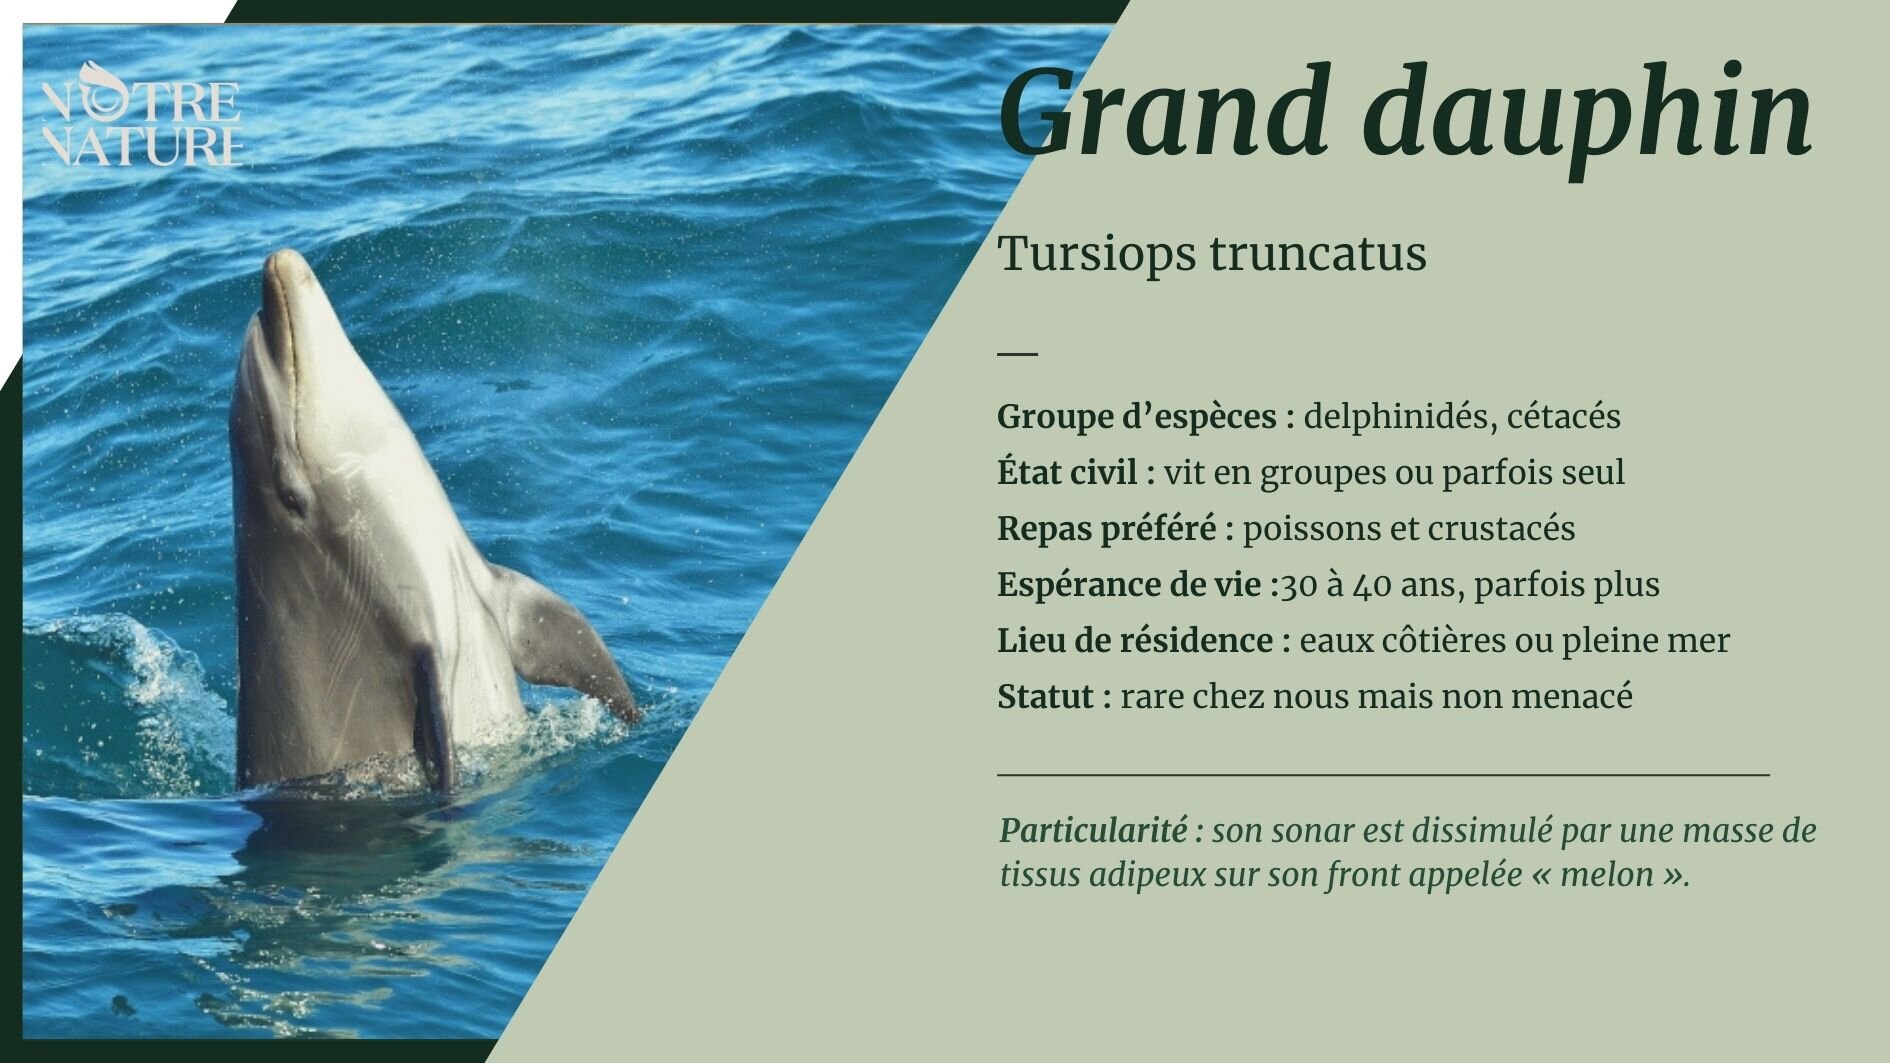 Grand dauphin - Notre Nature